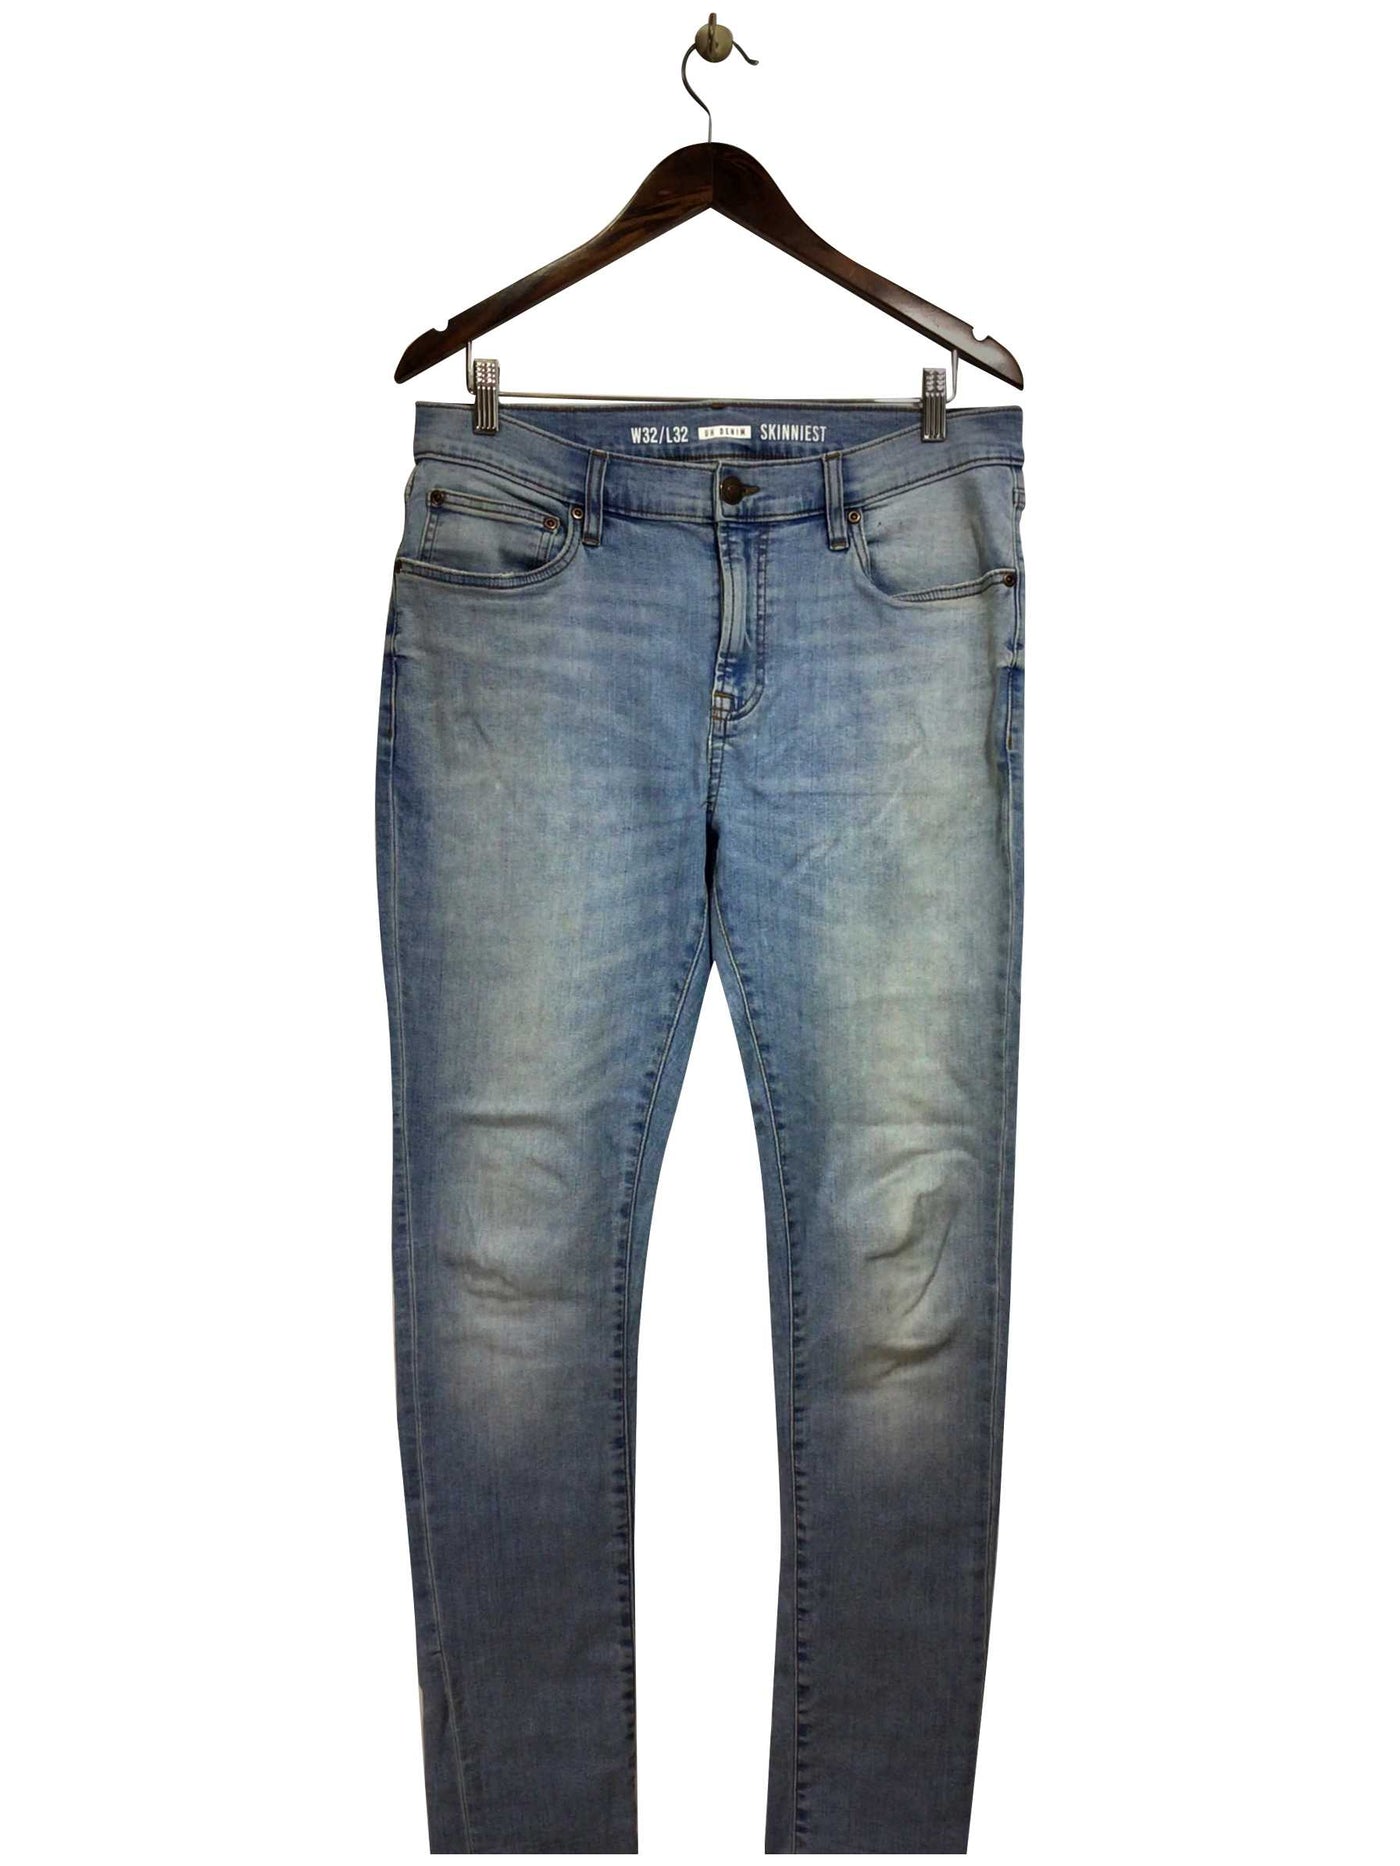 UH DENIM Regular fit Straight-legged Jean in Blue  -  32x32  25.99 Koop